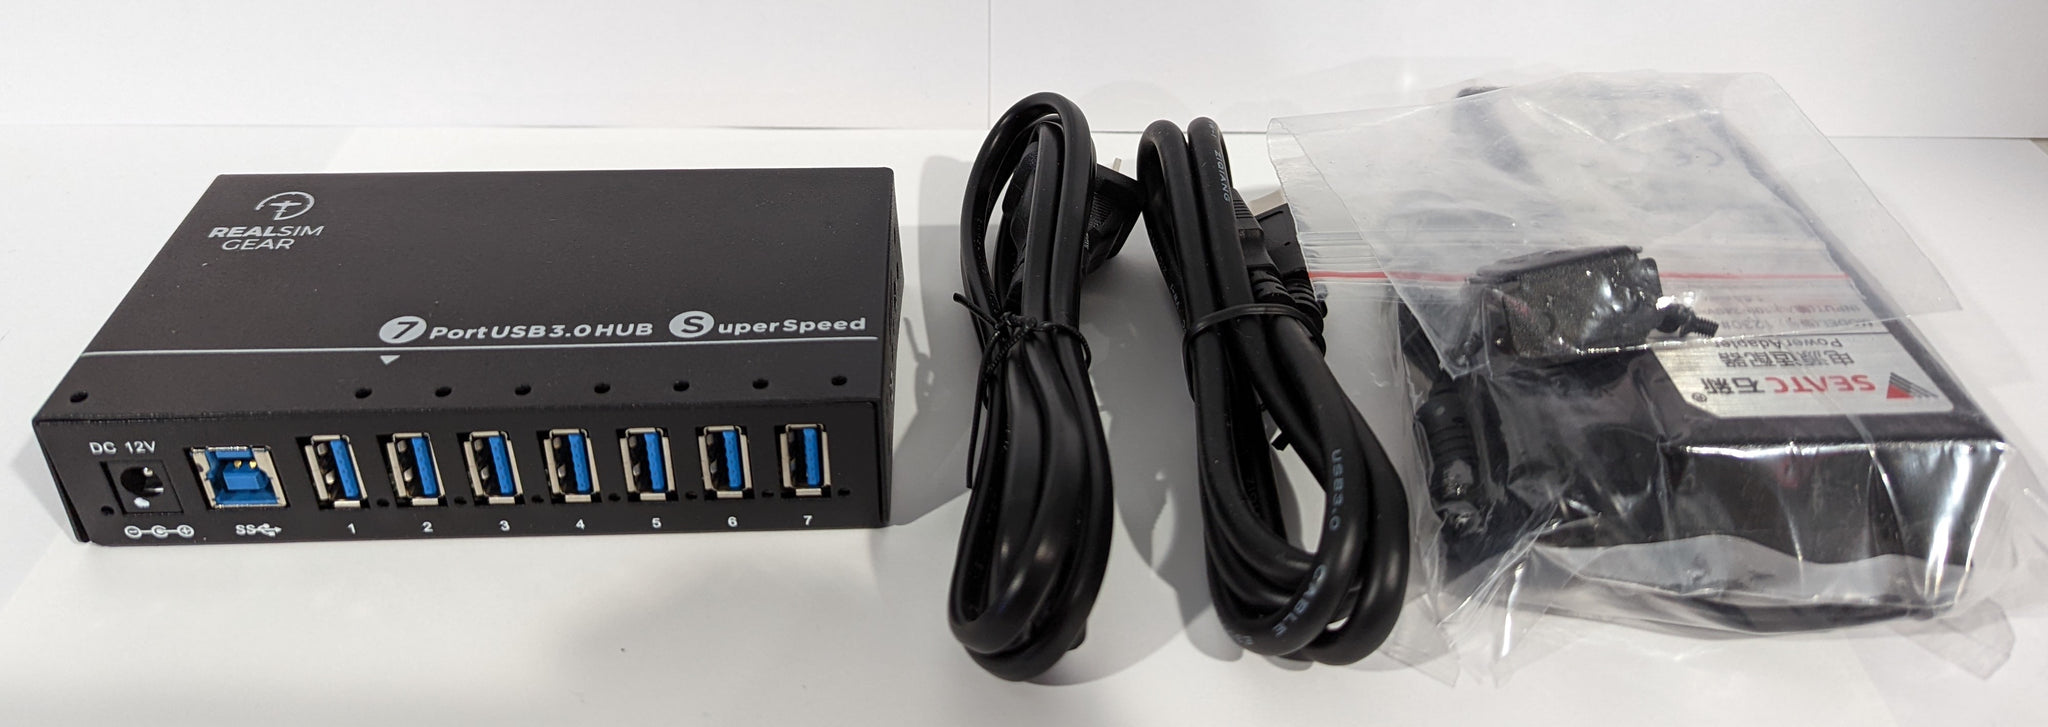 RealSimGear 10 Port USB3 Hub